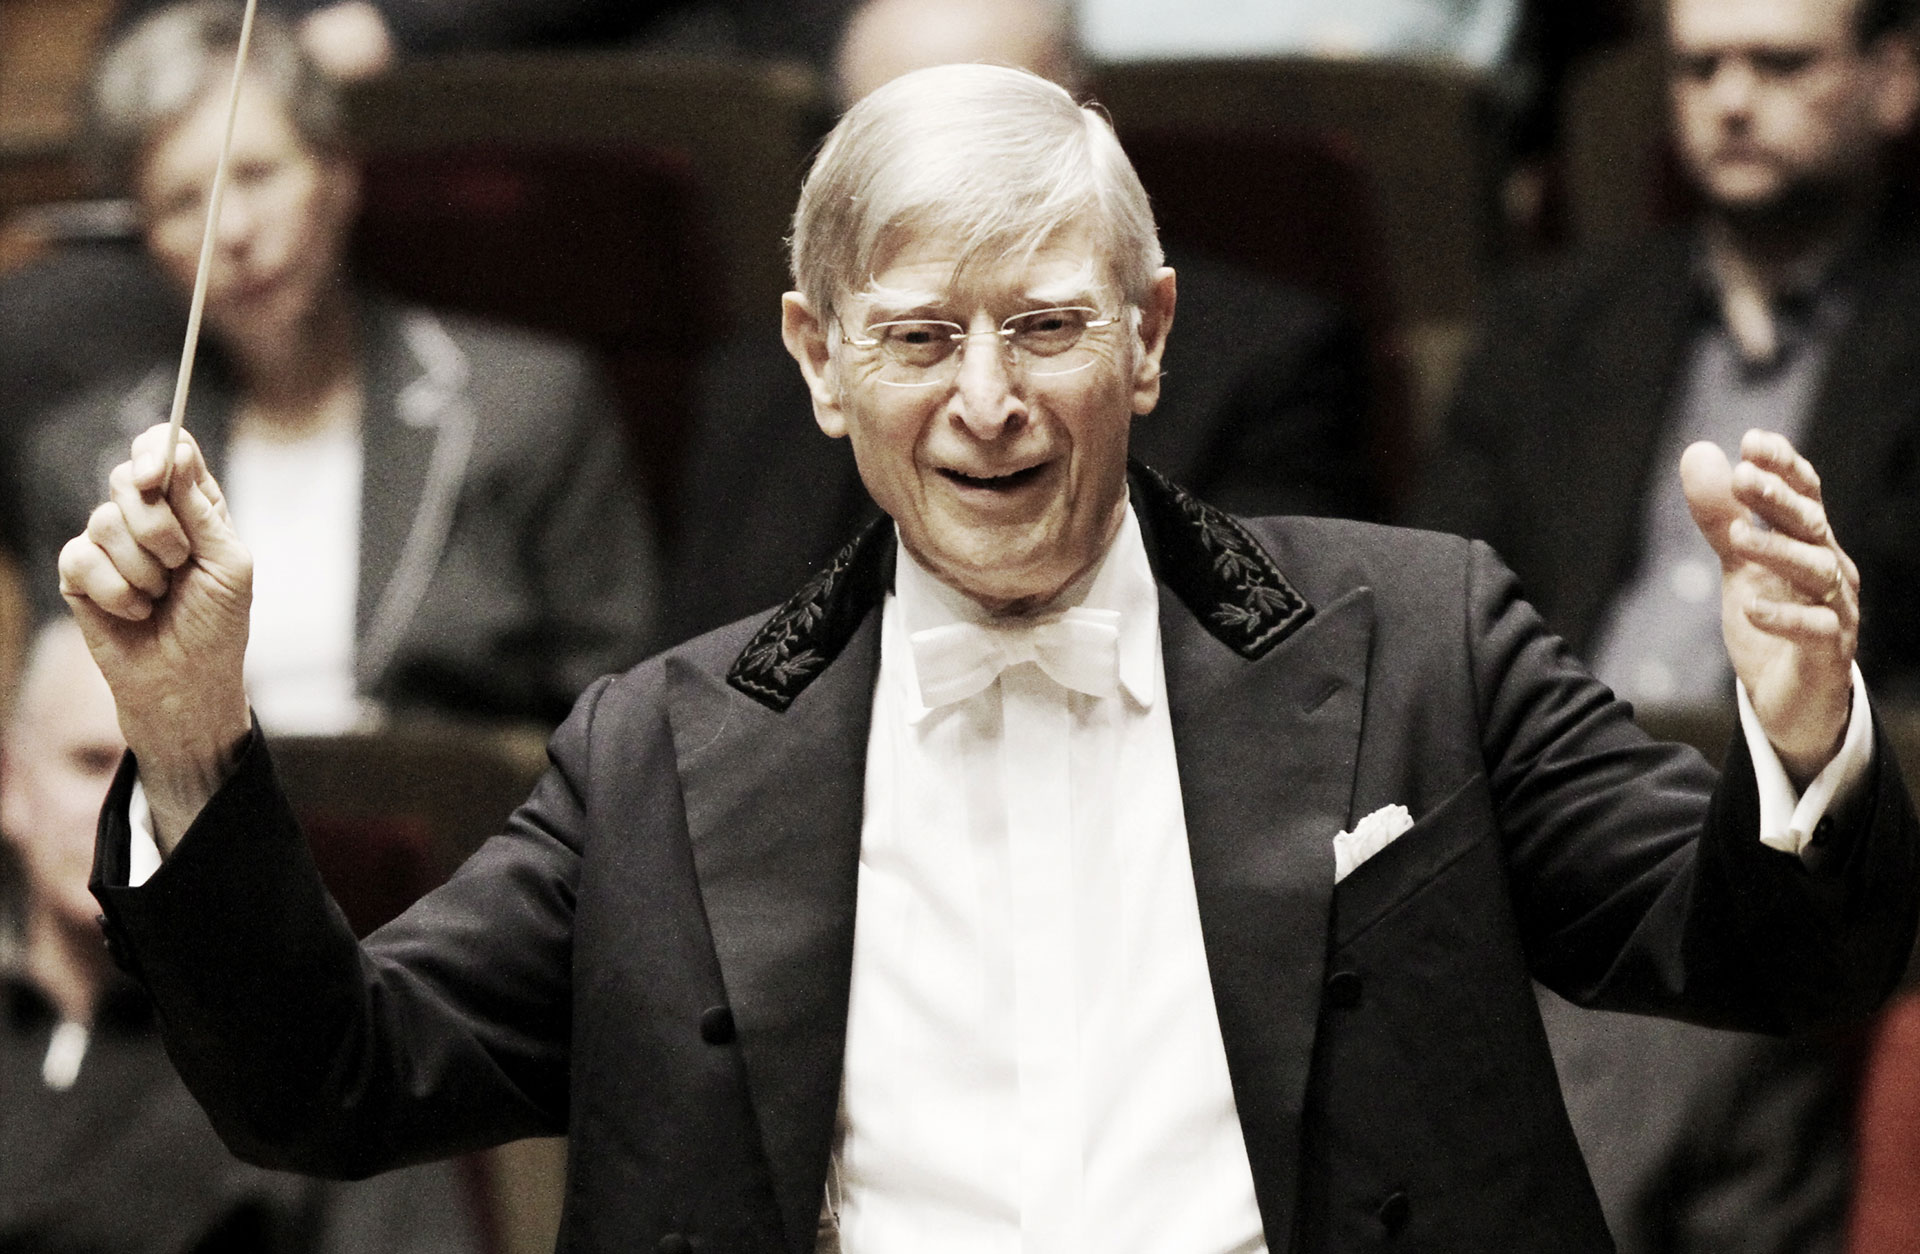 Dirigenten Herbert Blonstedt i en glad gest med taktpinnen i handen, orkestermusikerna syns bakom honom.